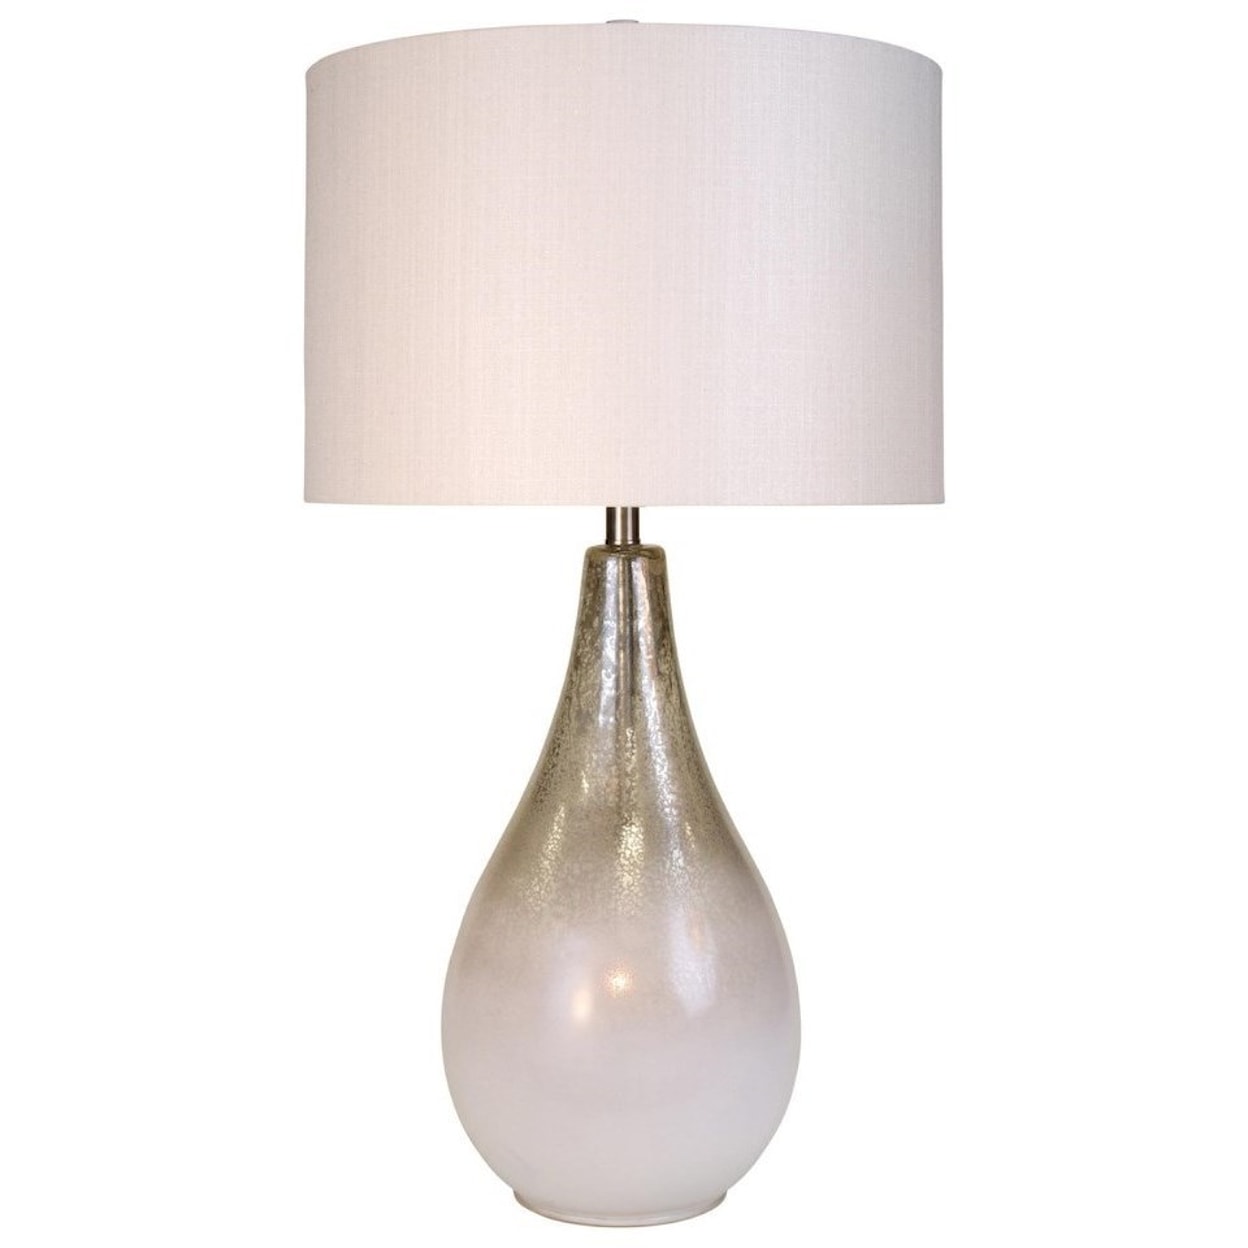 StyleCraft Lamps Glass Lamp w/ Additional Nightlight Feature